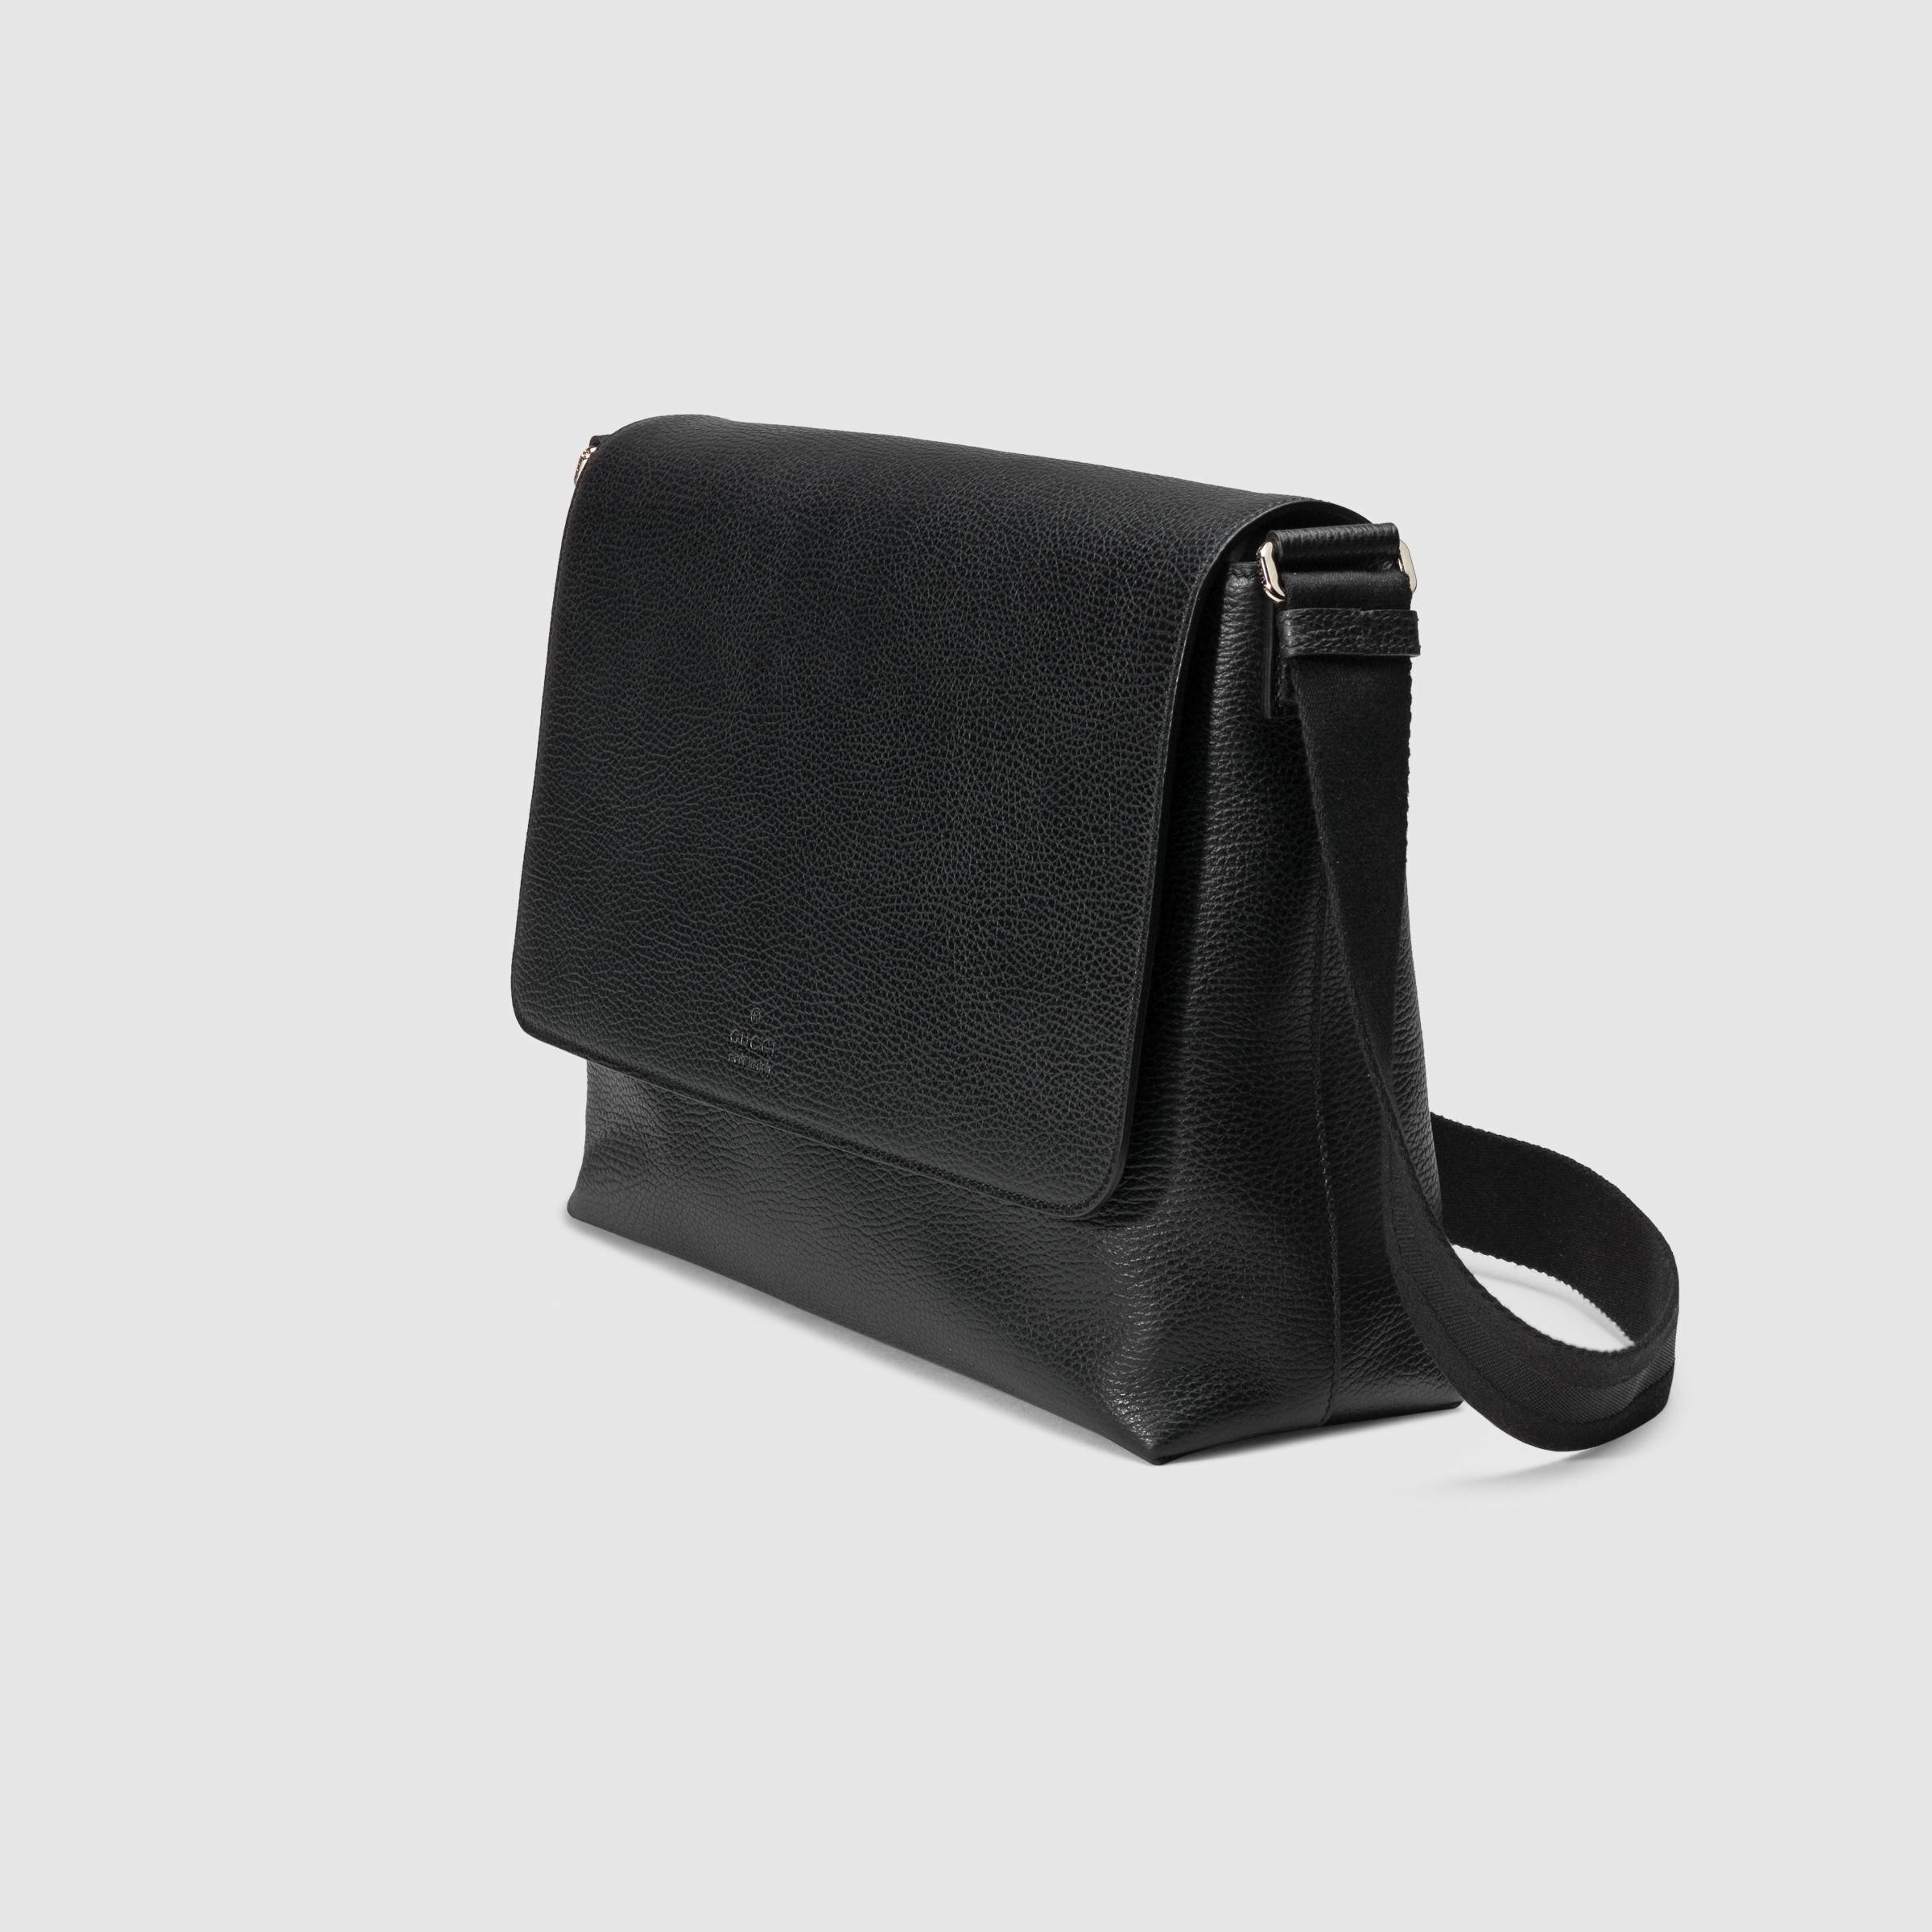 gucci leather messenger bag